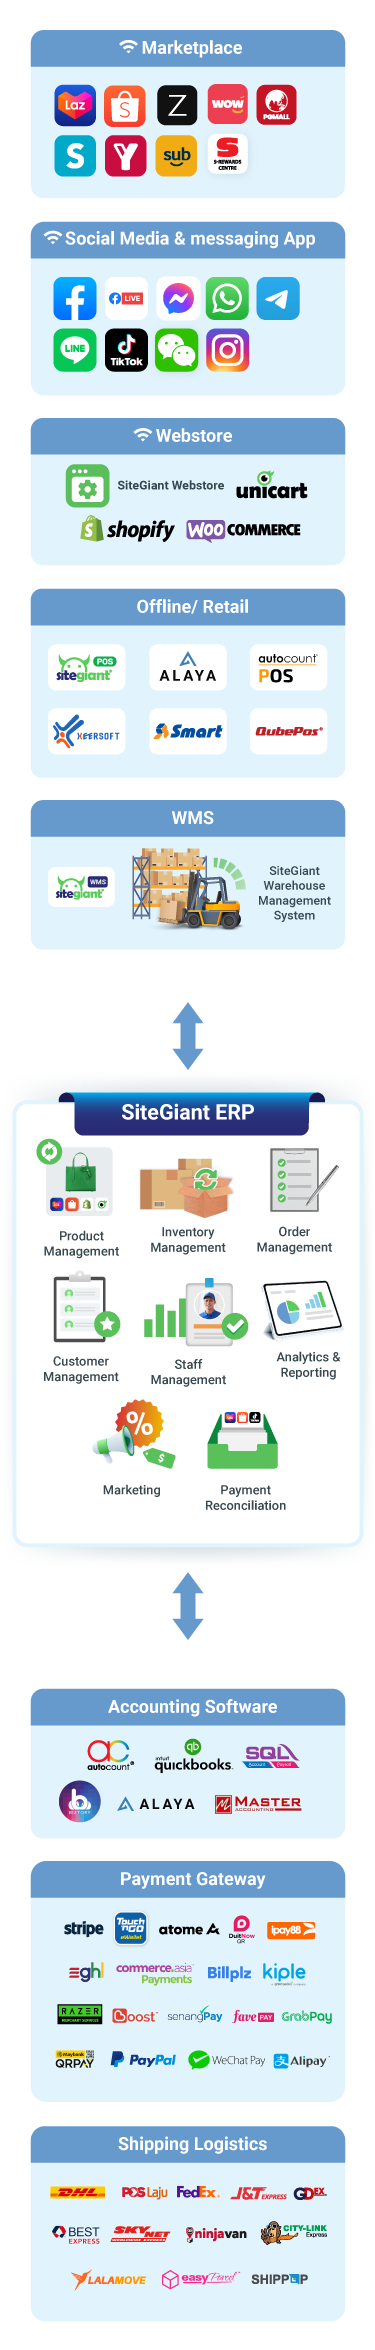 SiteGiant ERP overview structure